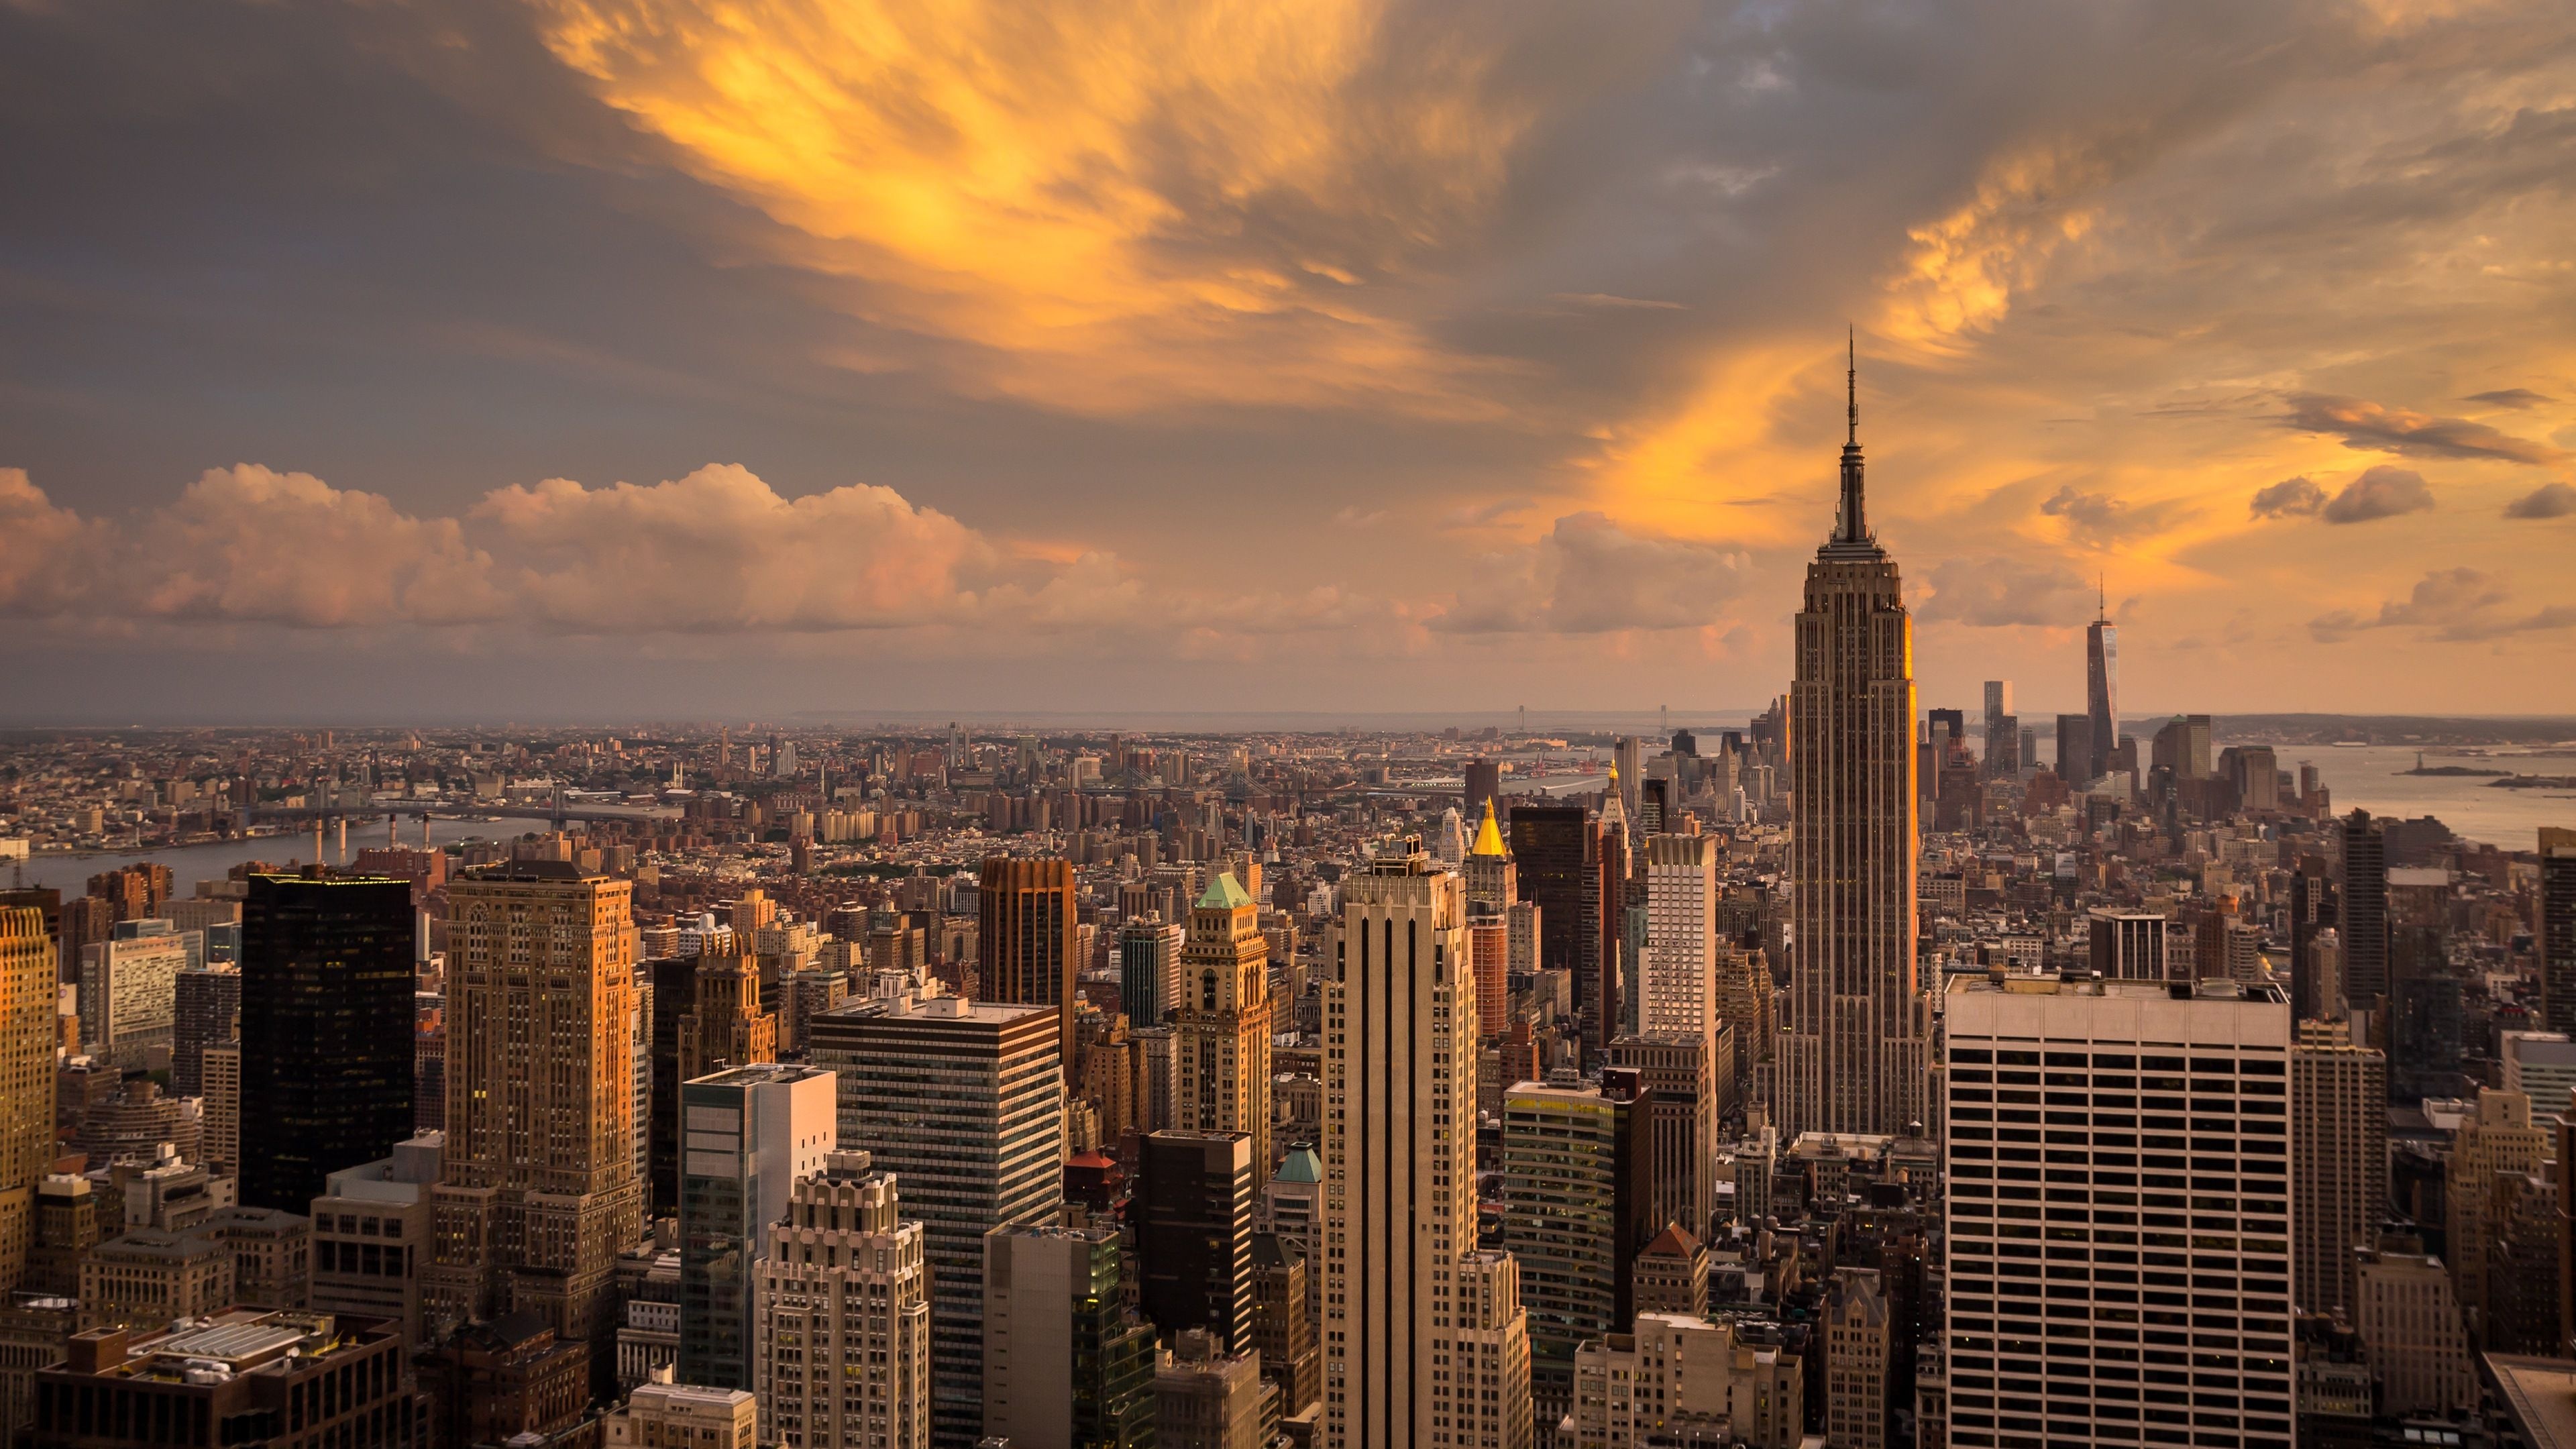 New York: New York City, Skyscrapers, Cityscape. 3840x2160 4K Wallpaper.